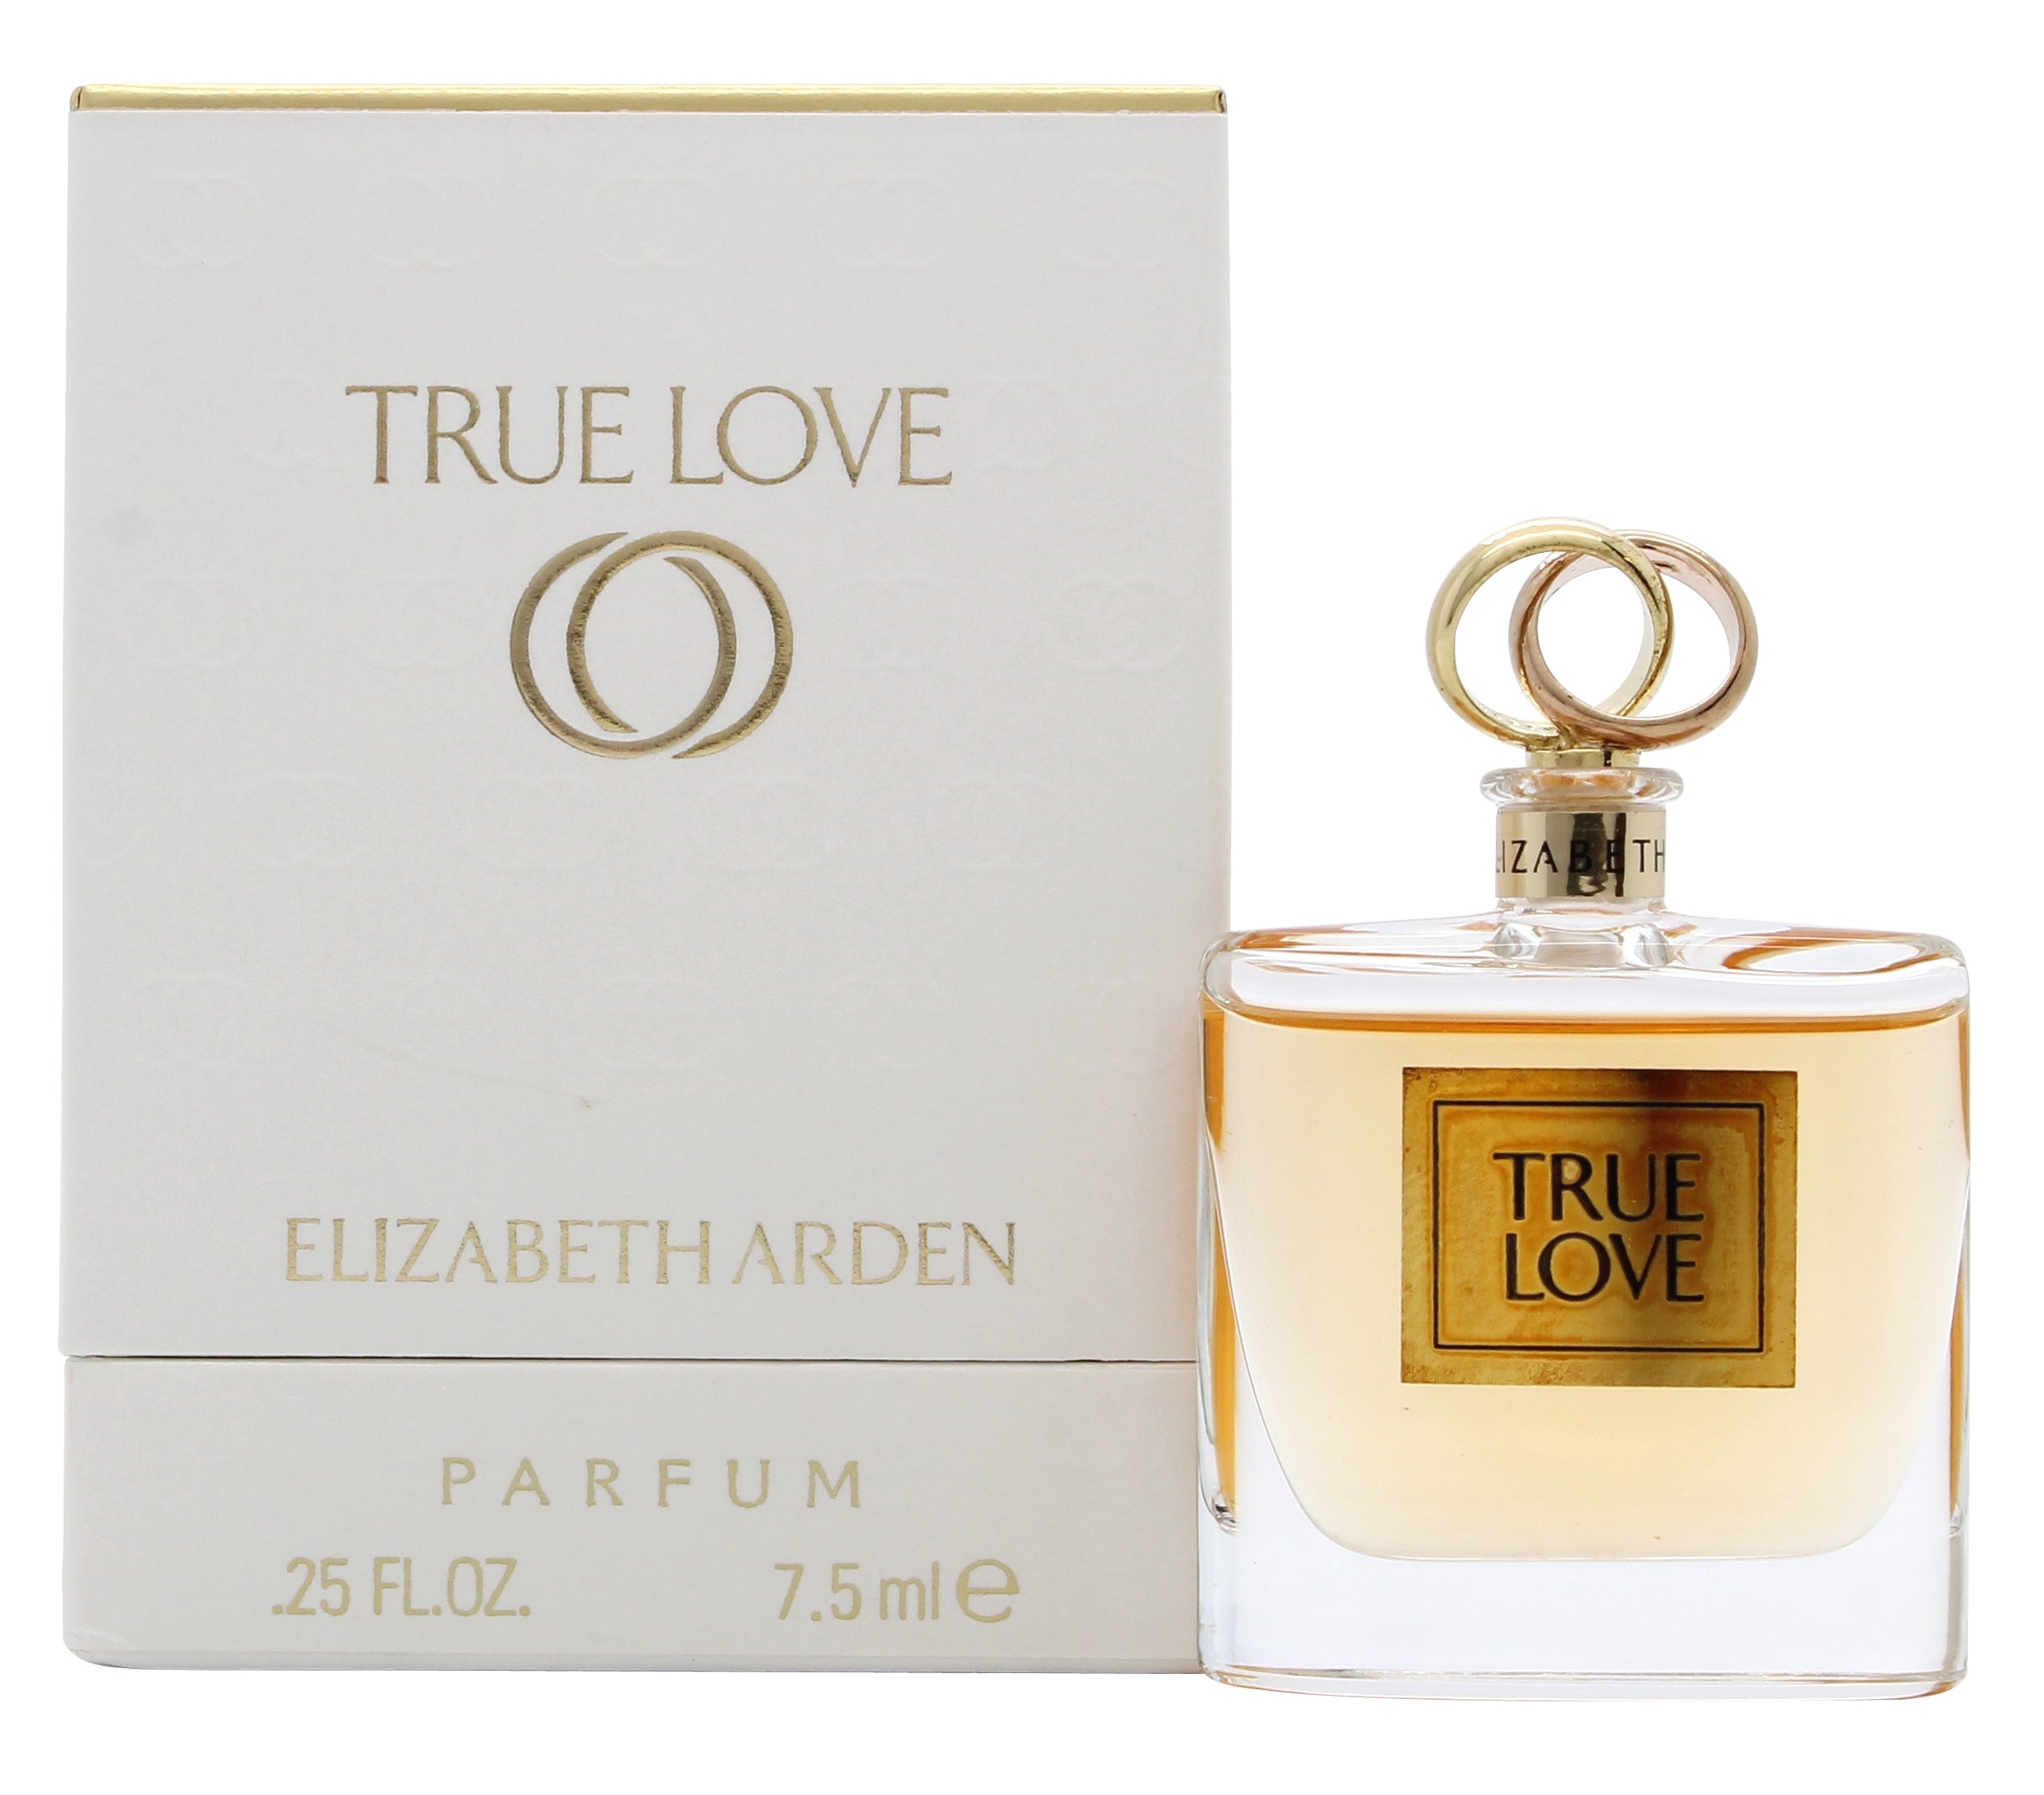 View Elizabeth Arden True Love Eau de Parfum 75ml information